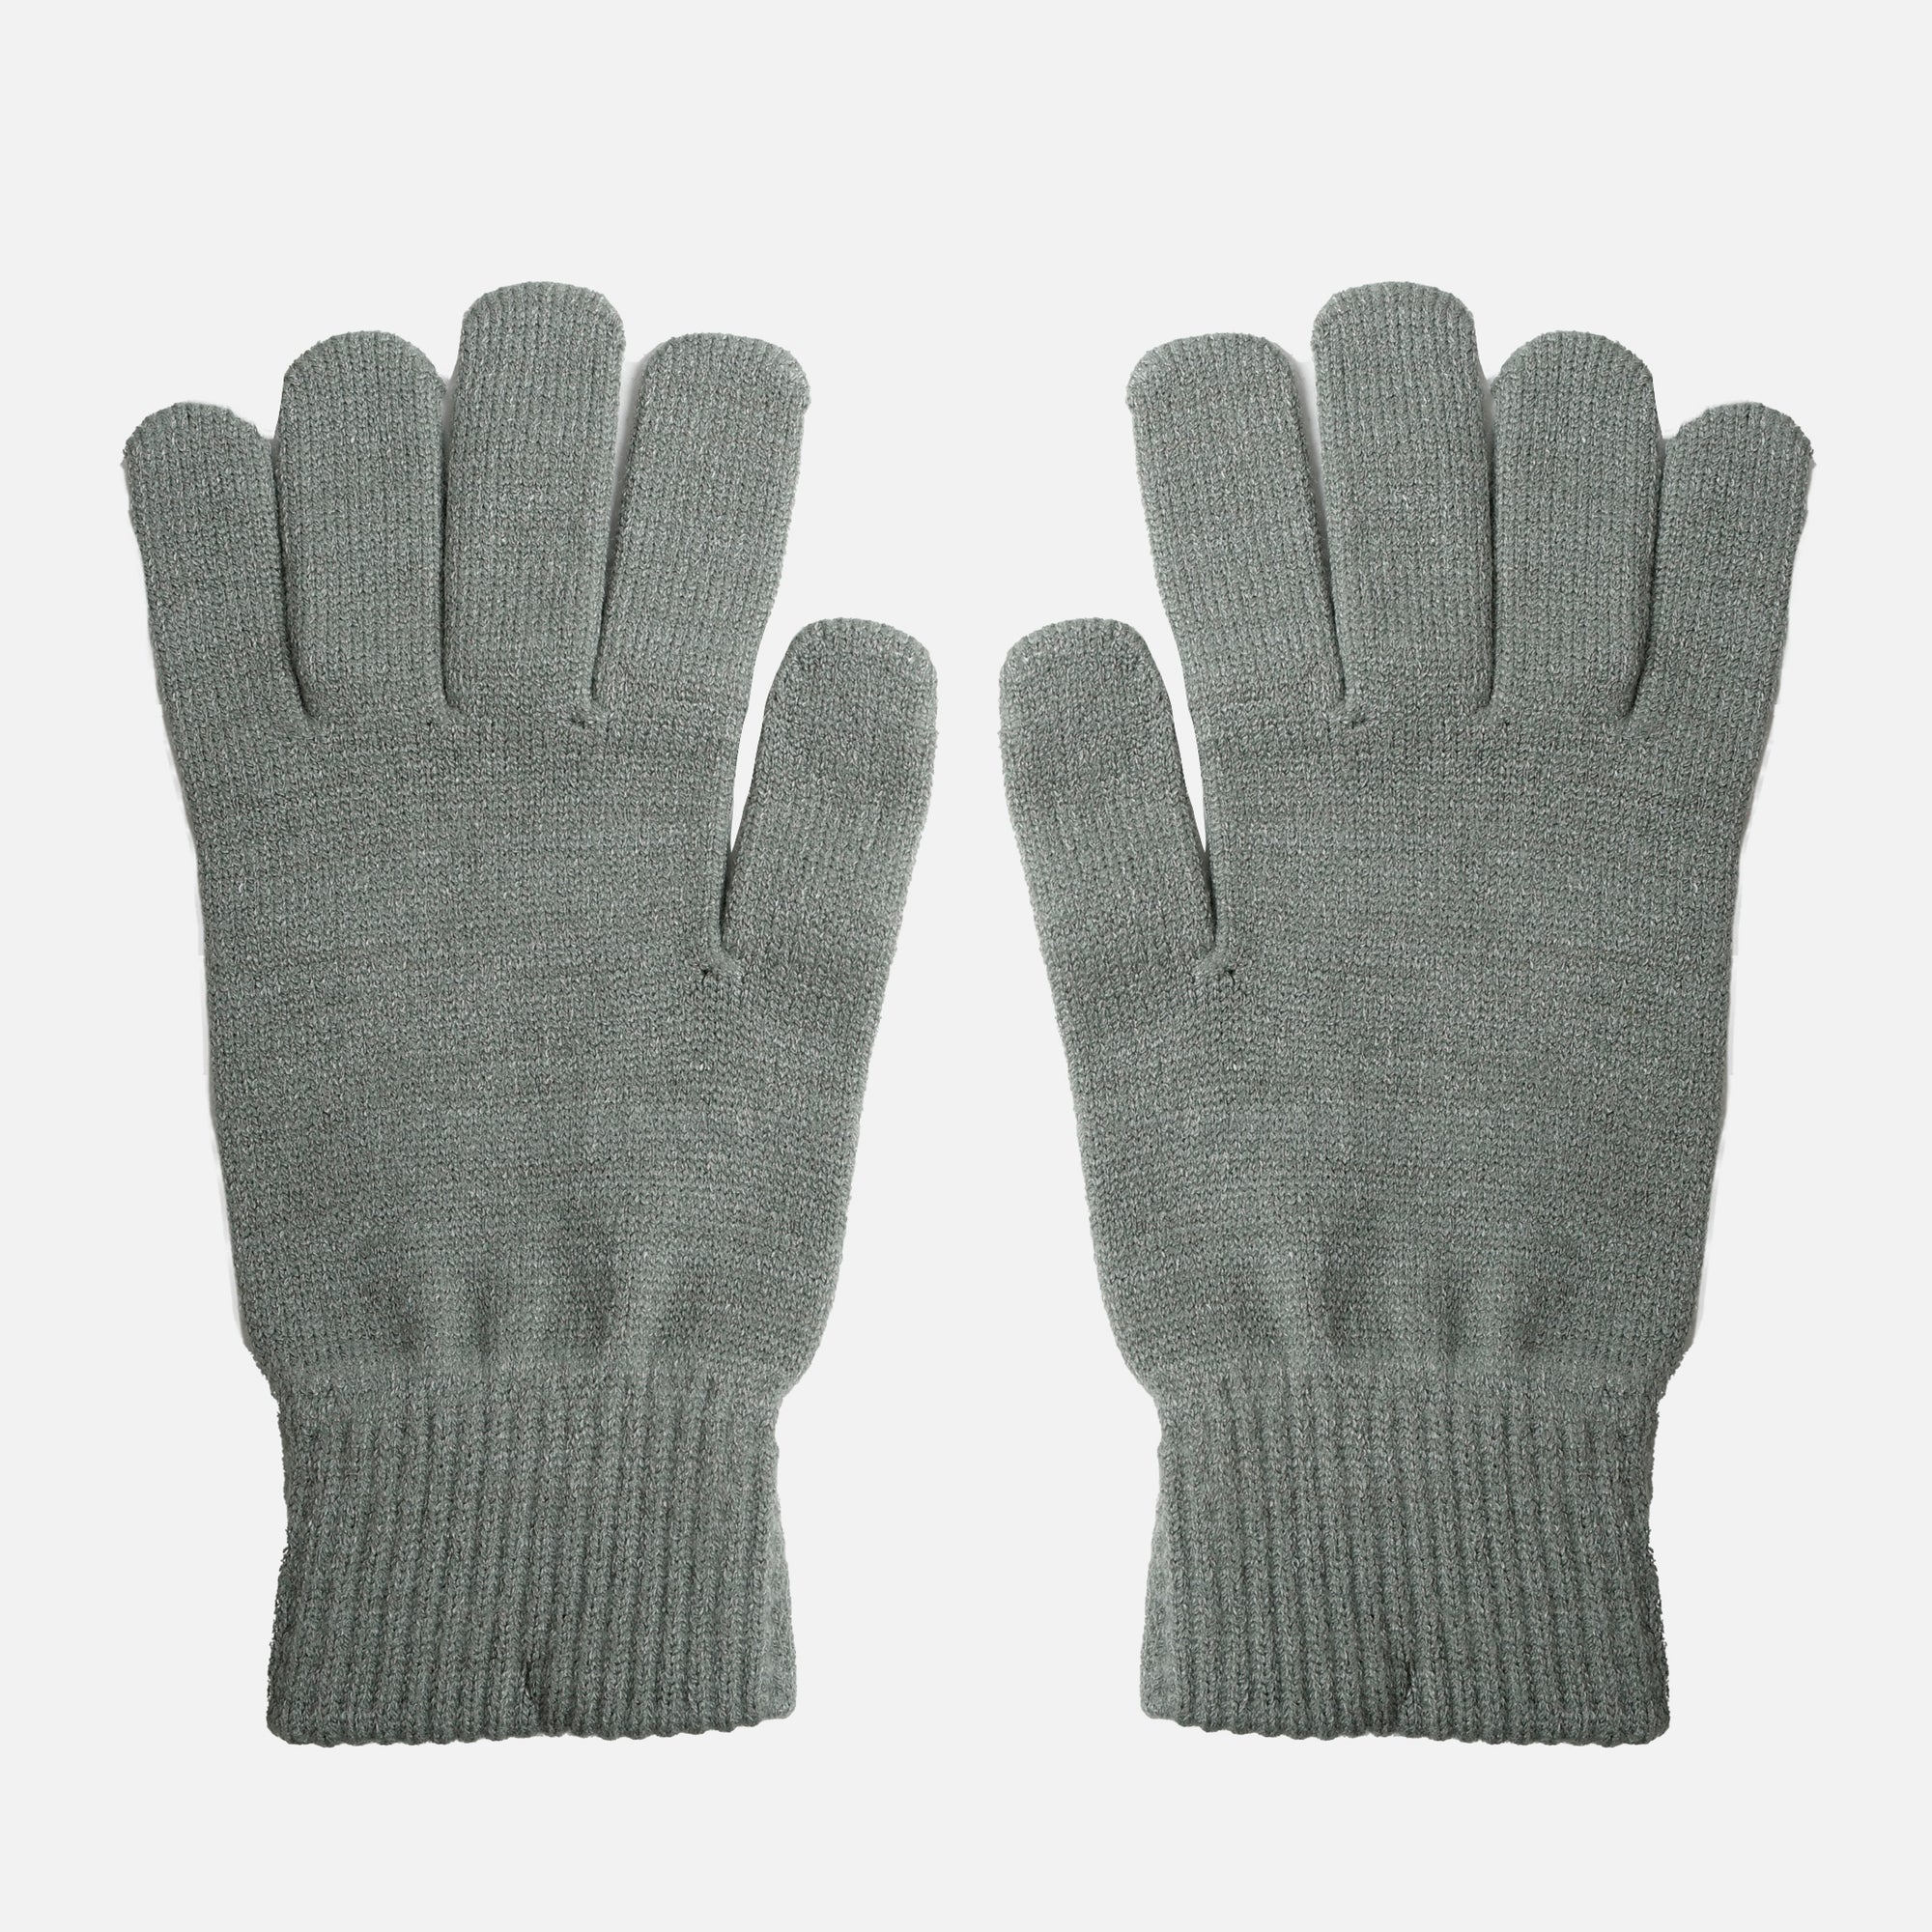 Green gloves